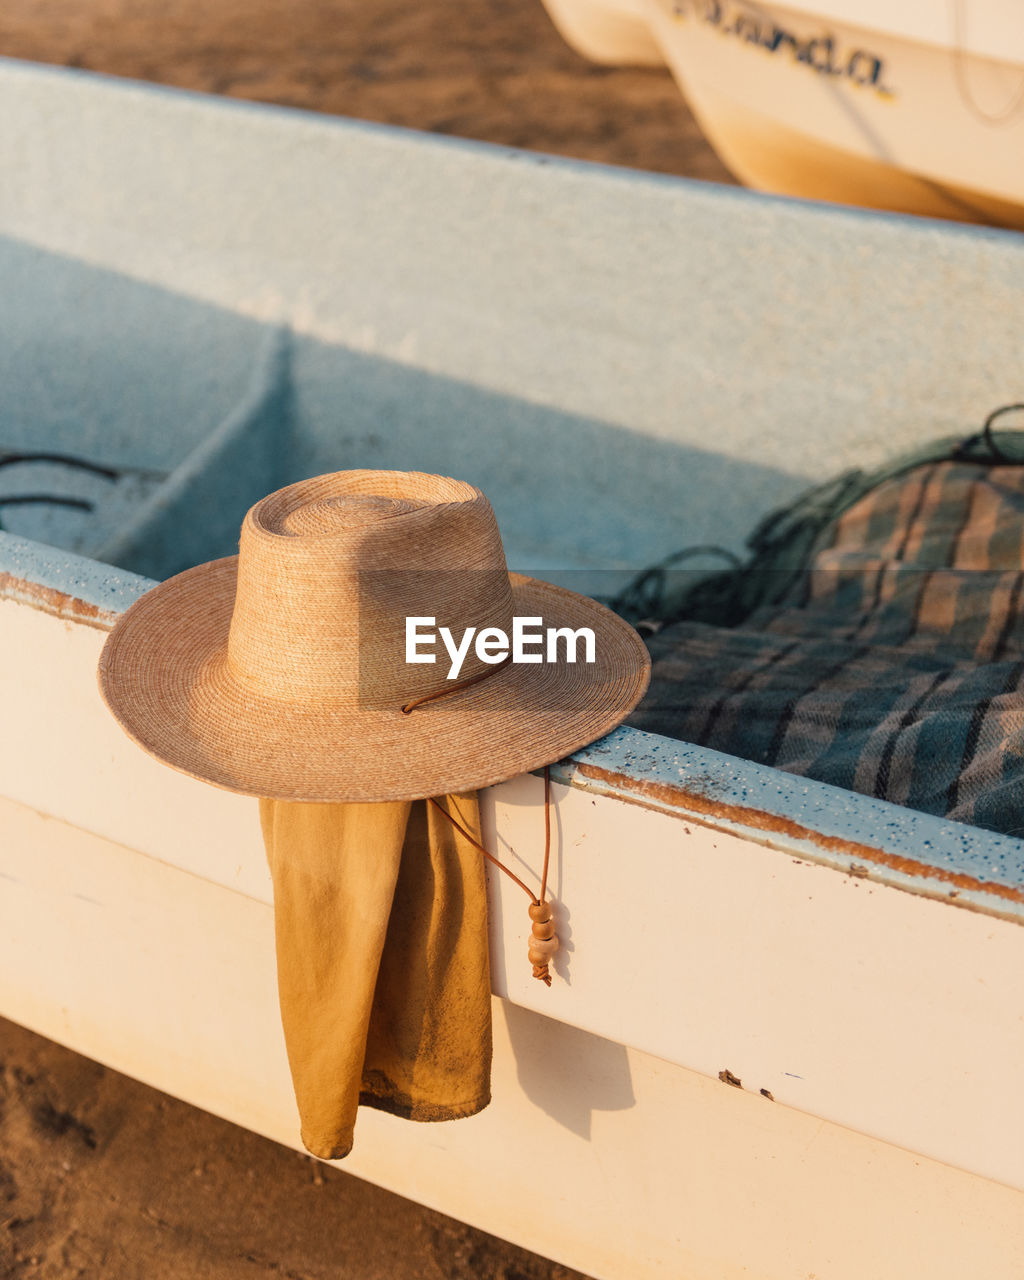 A traveller's hat rest along side a fishing boat